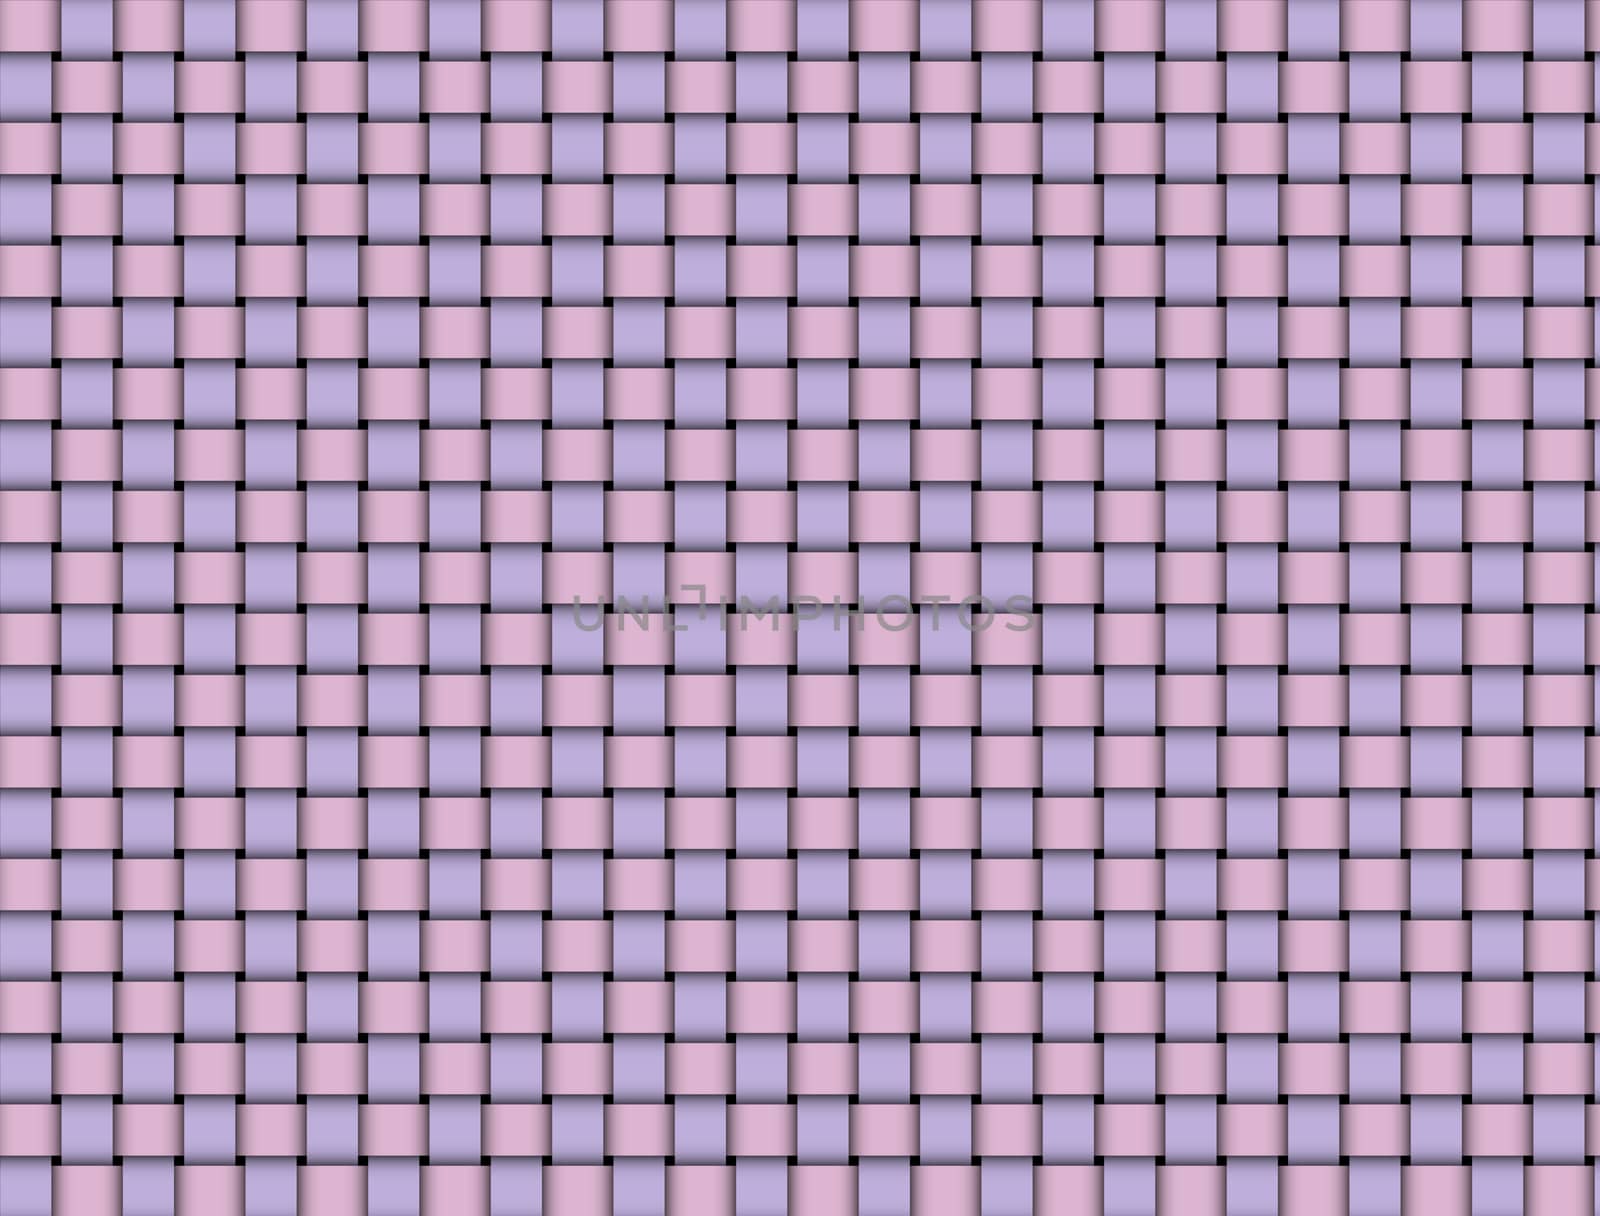 wicker texture background by sfinks